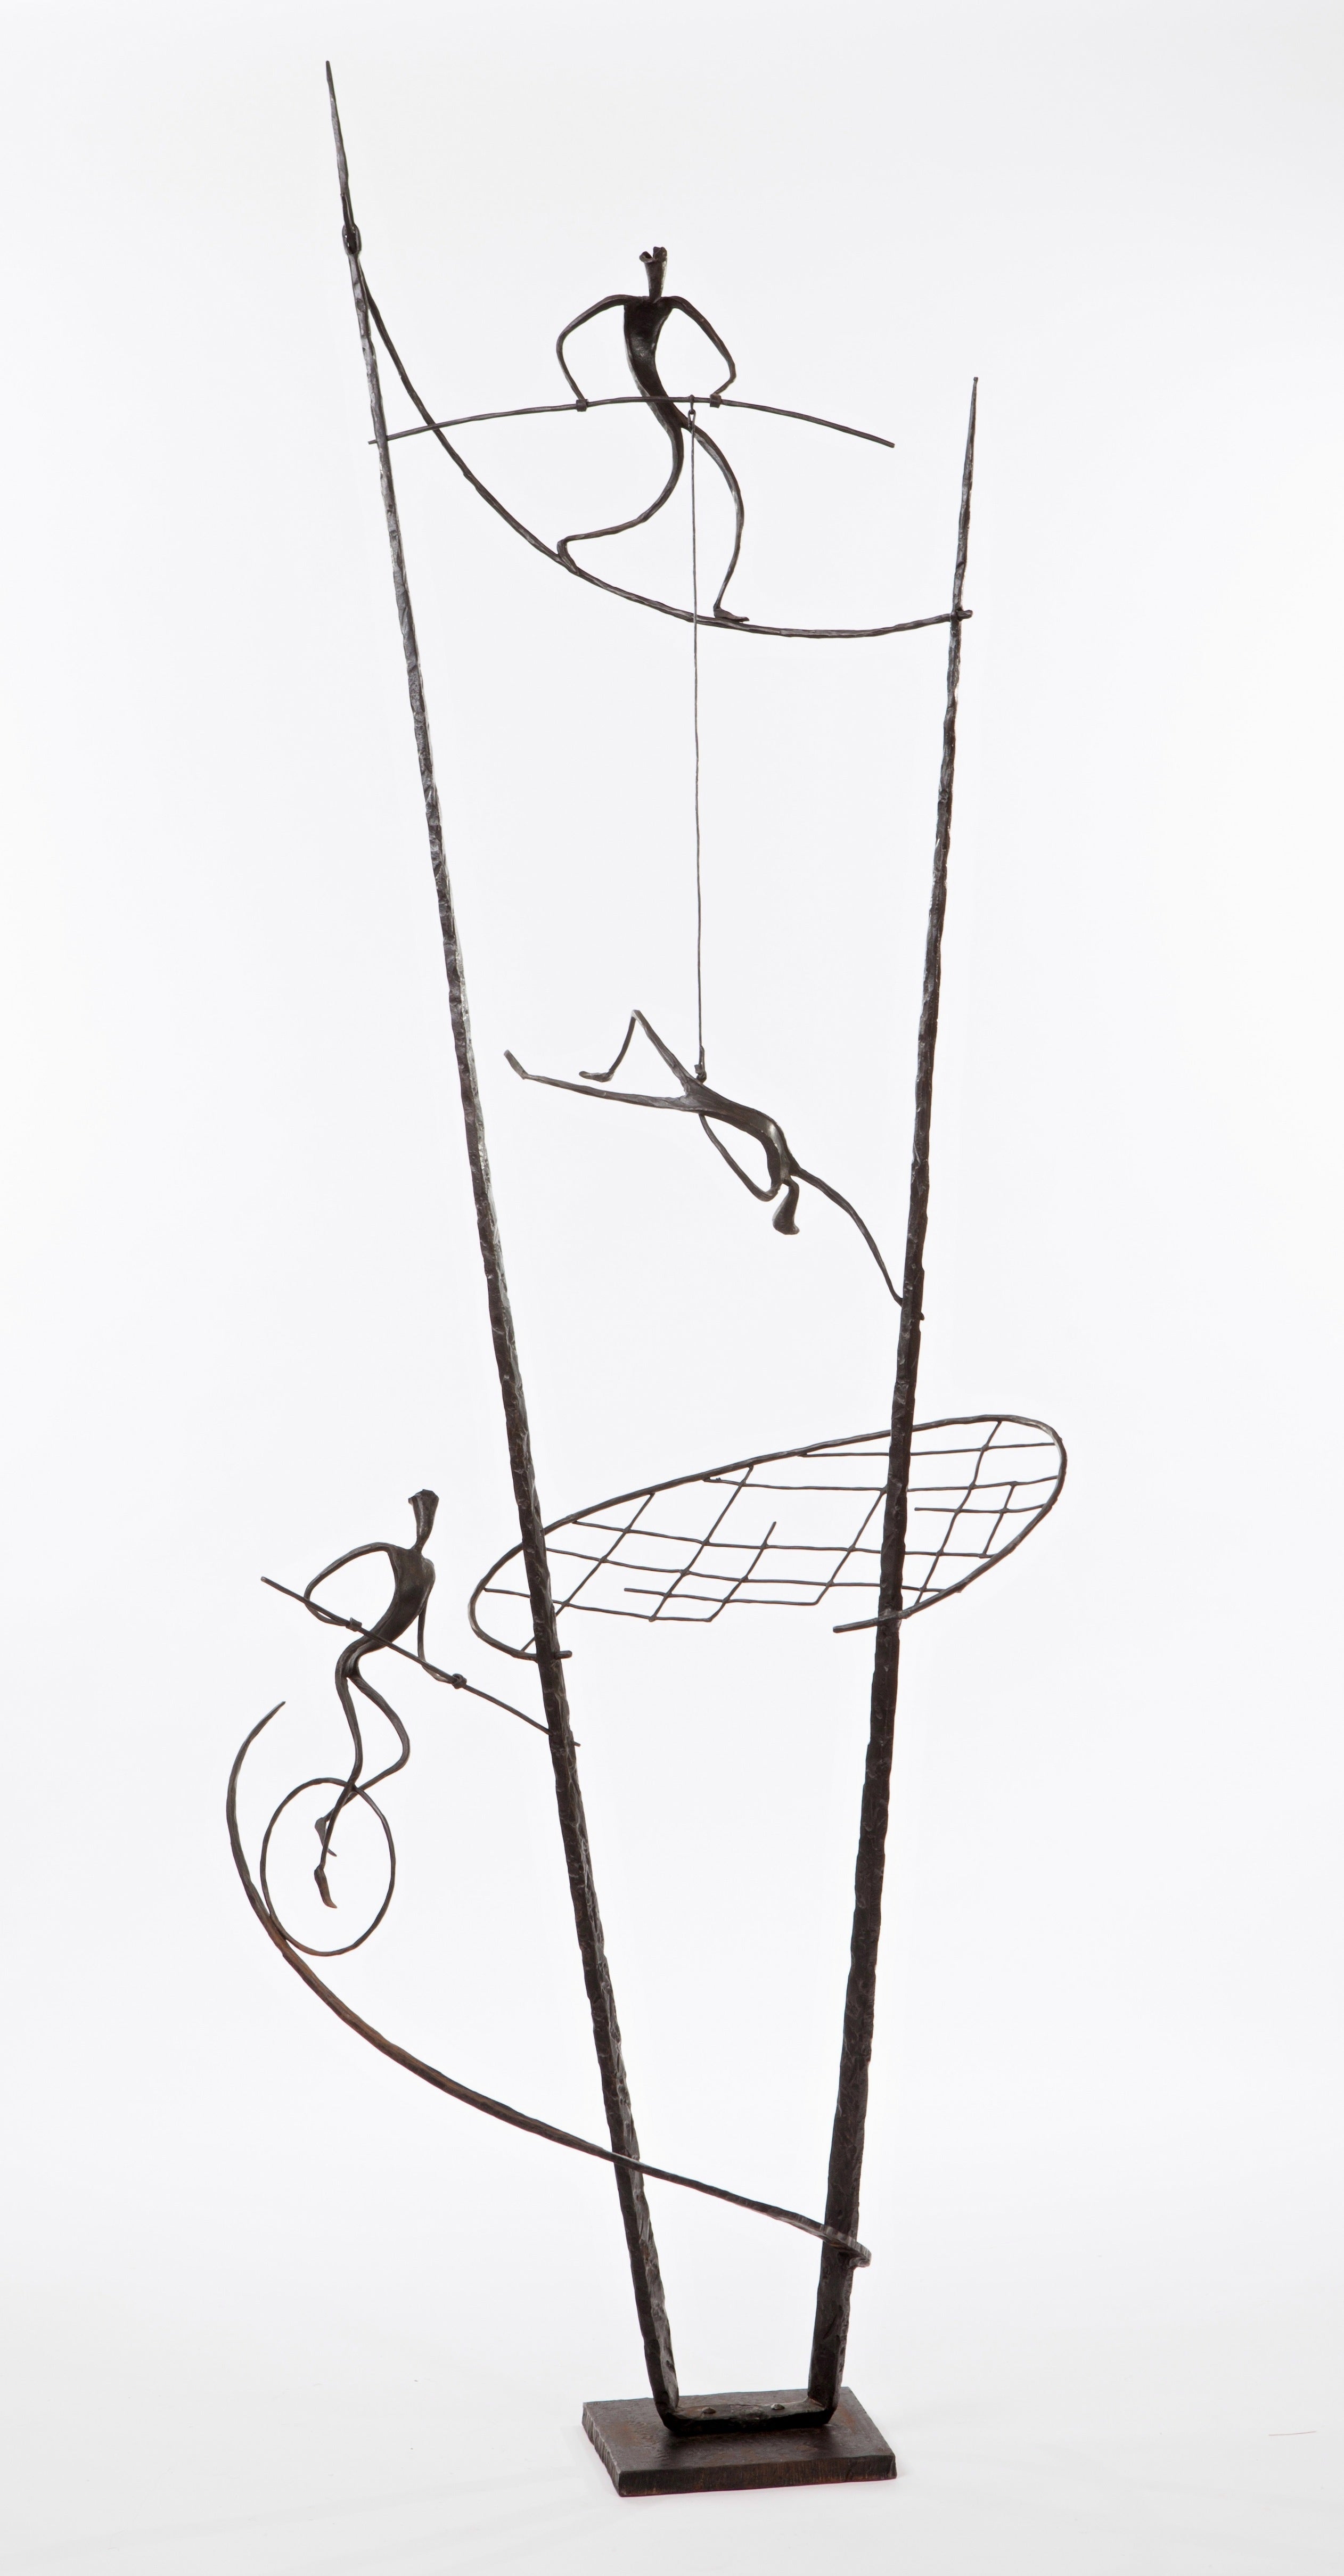 Acrobatic Sculpture in the manner of Paul Lobel